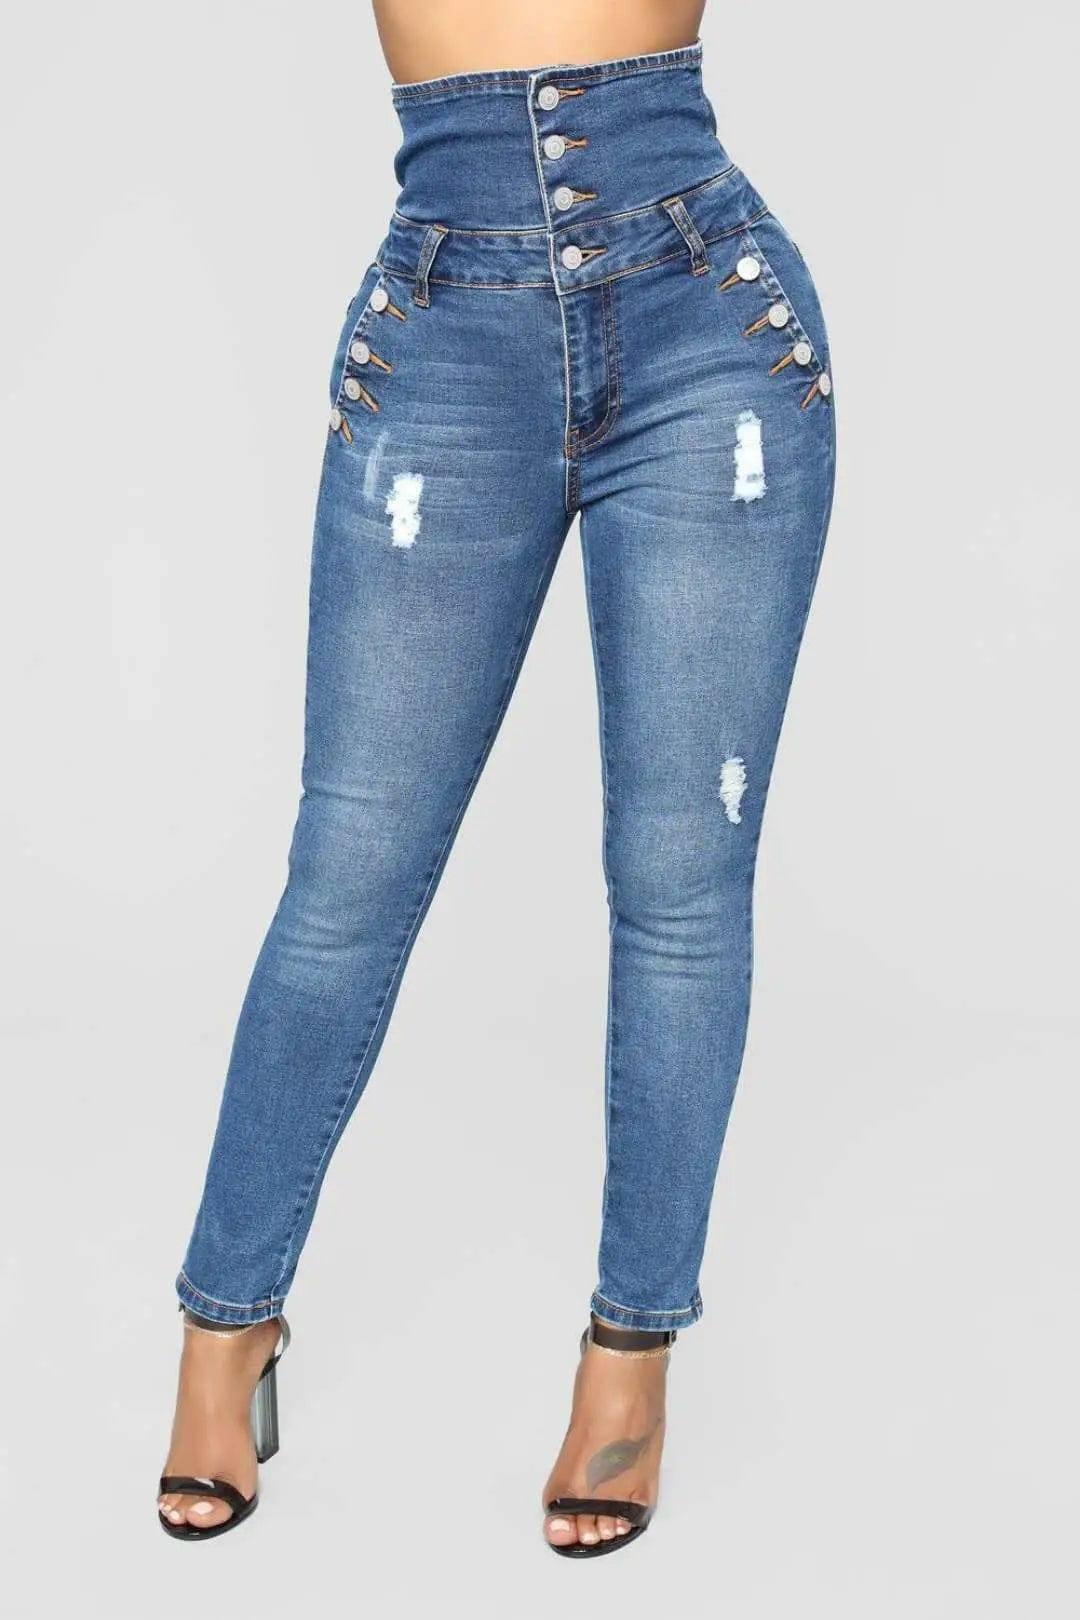 Ripped hole fashion Jeans Women High Waist skinny pencil-Light blue-1